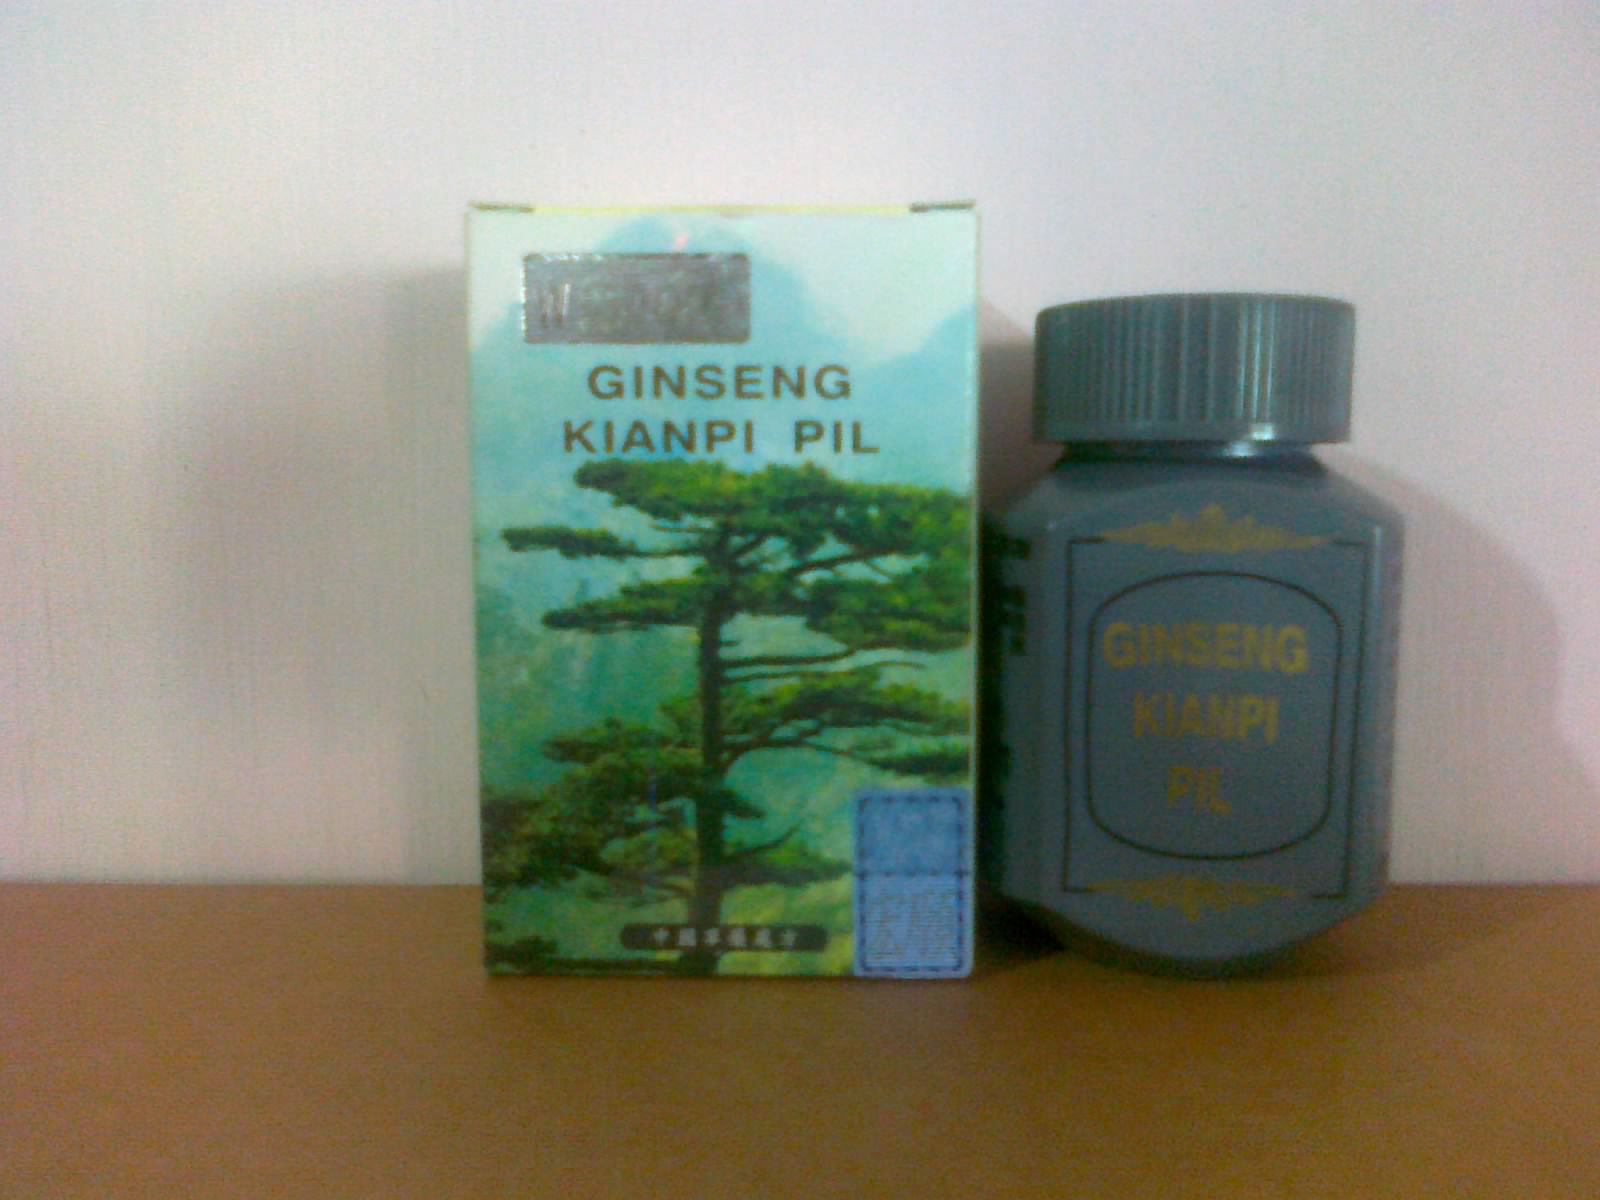 Ginseng kianpi pil отзывы. отзывы врачей о ginseng kianpi pil. что входит в состав ginseng kianpi pil?